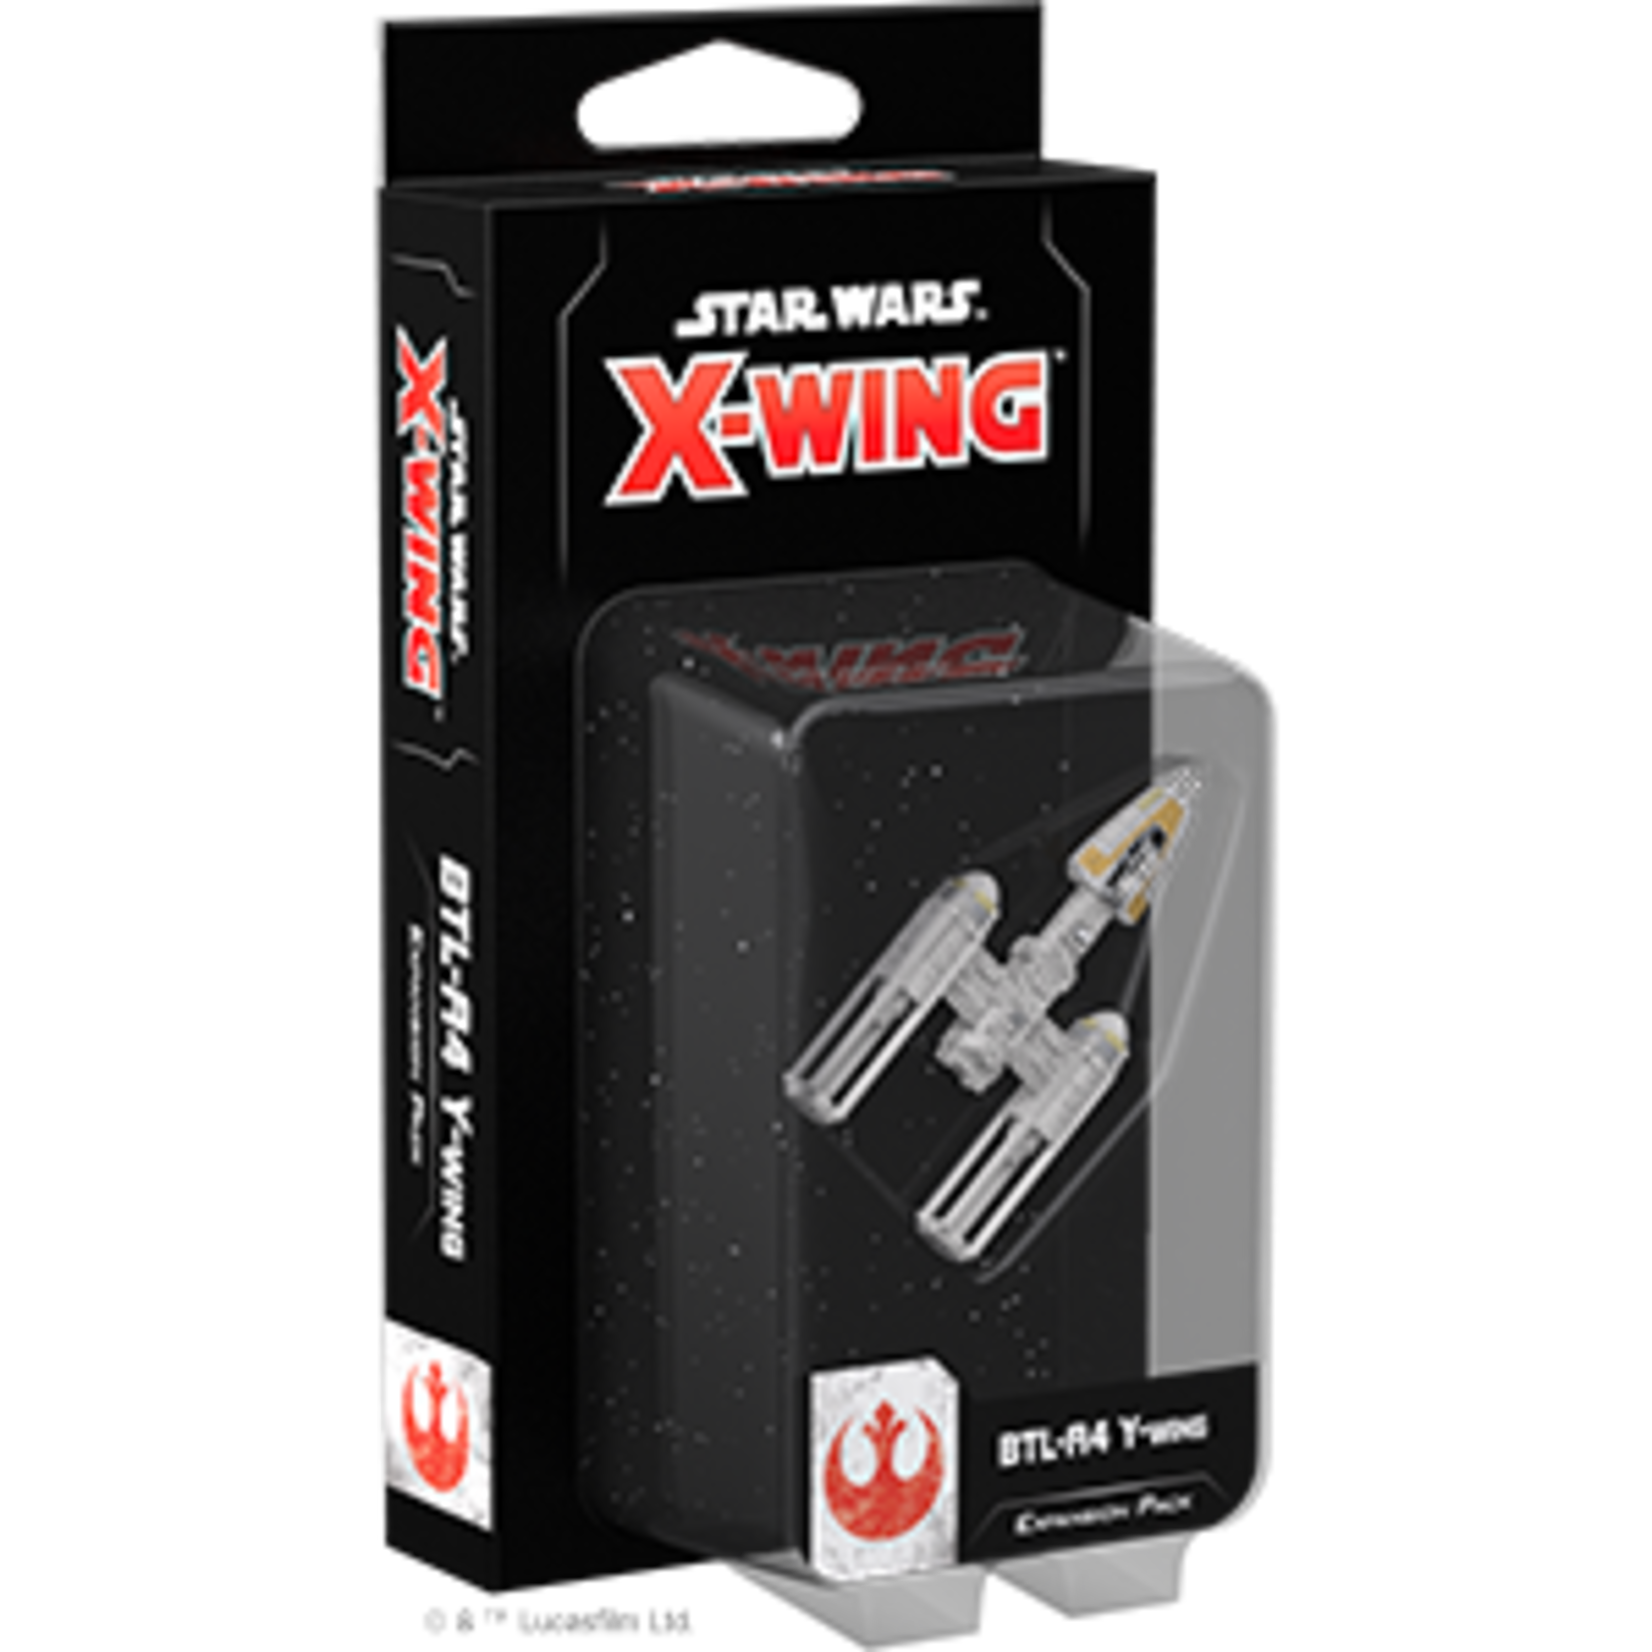 Fantasy Flight Games Star Wars X-Wing: 2nd Edition - BTL-A4 Y-Wing Expansion Pack